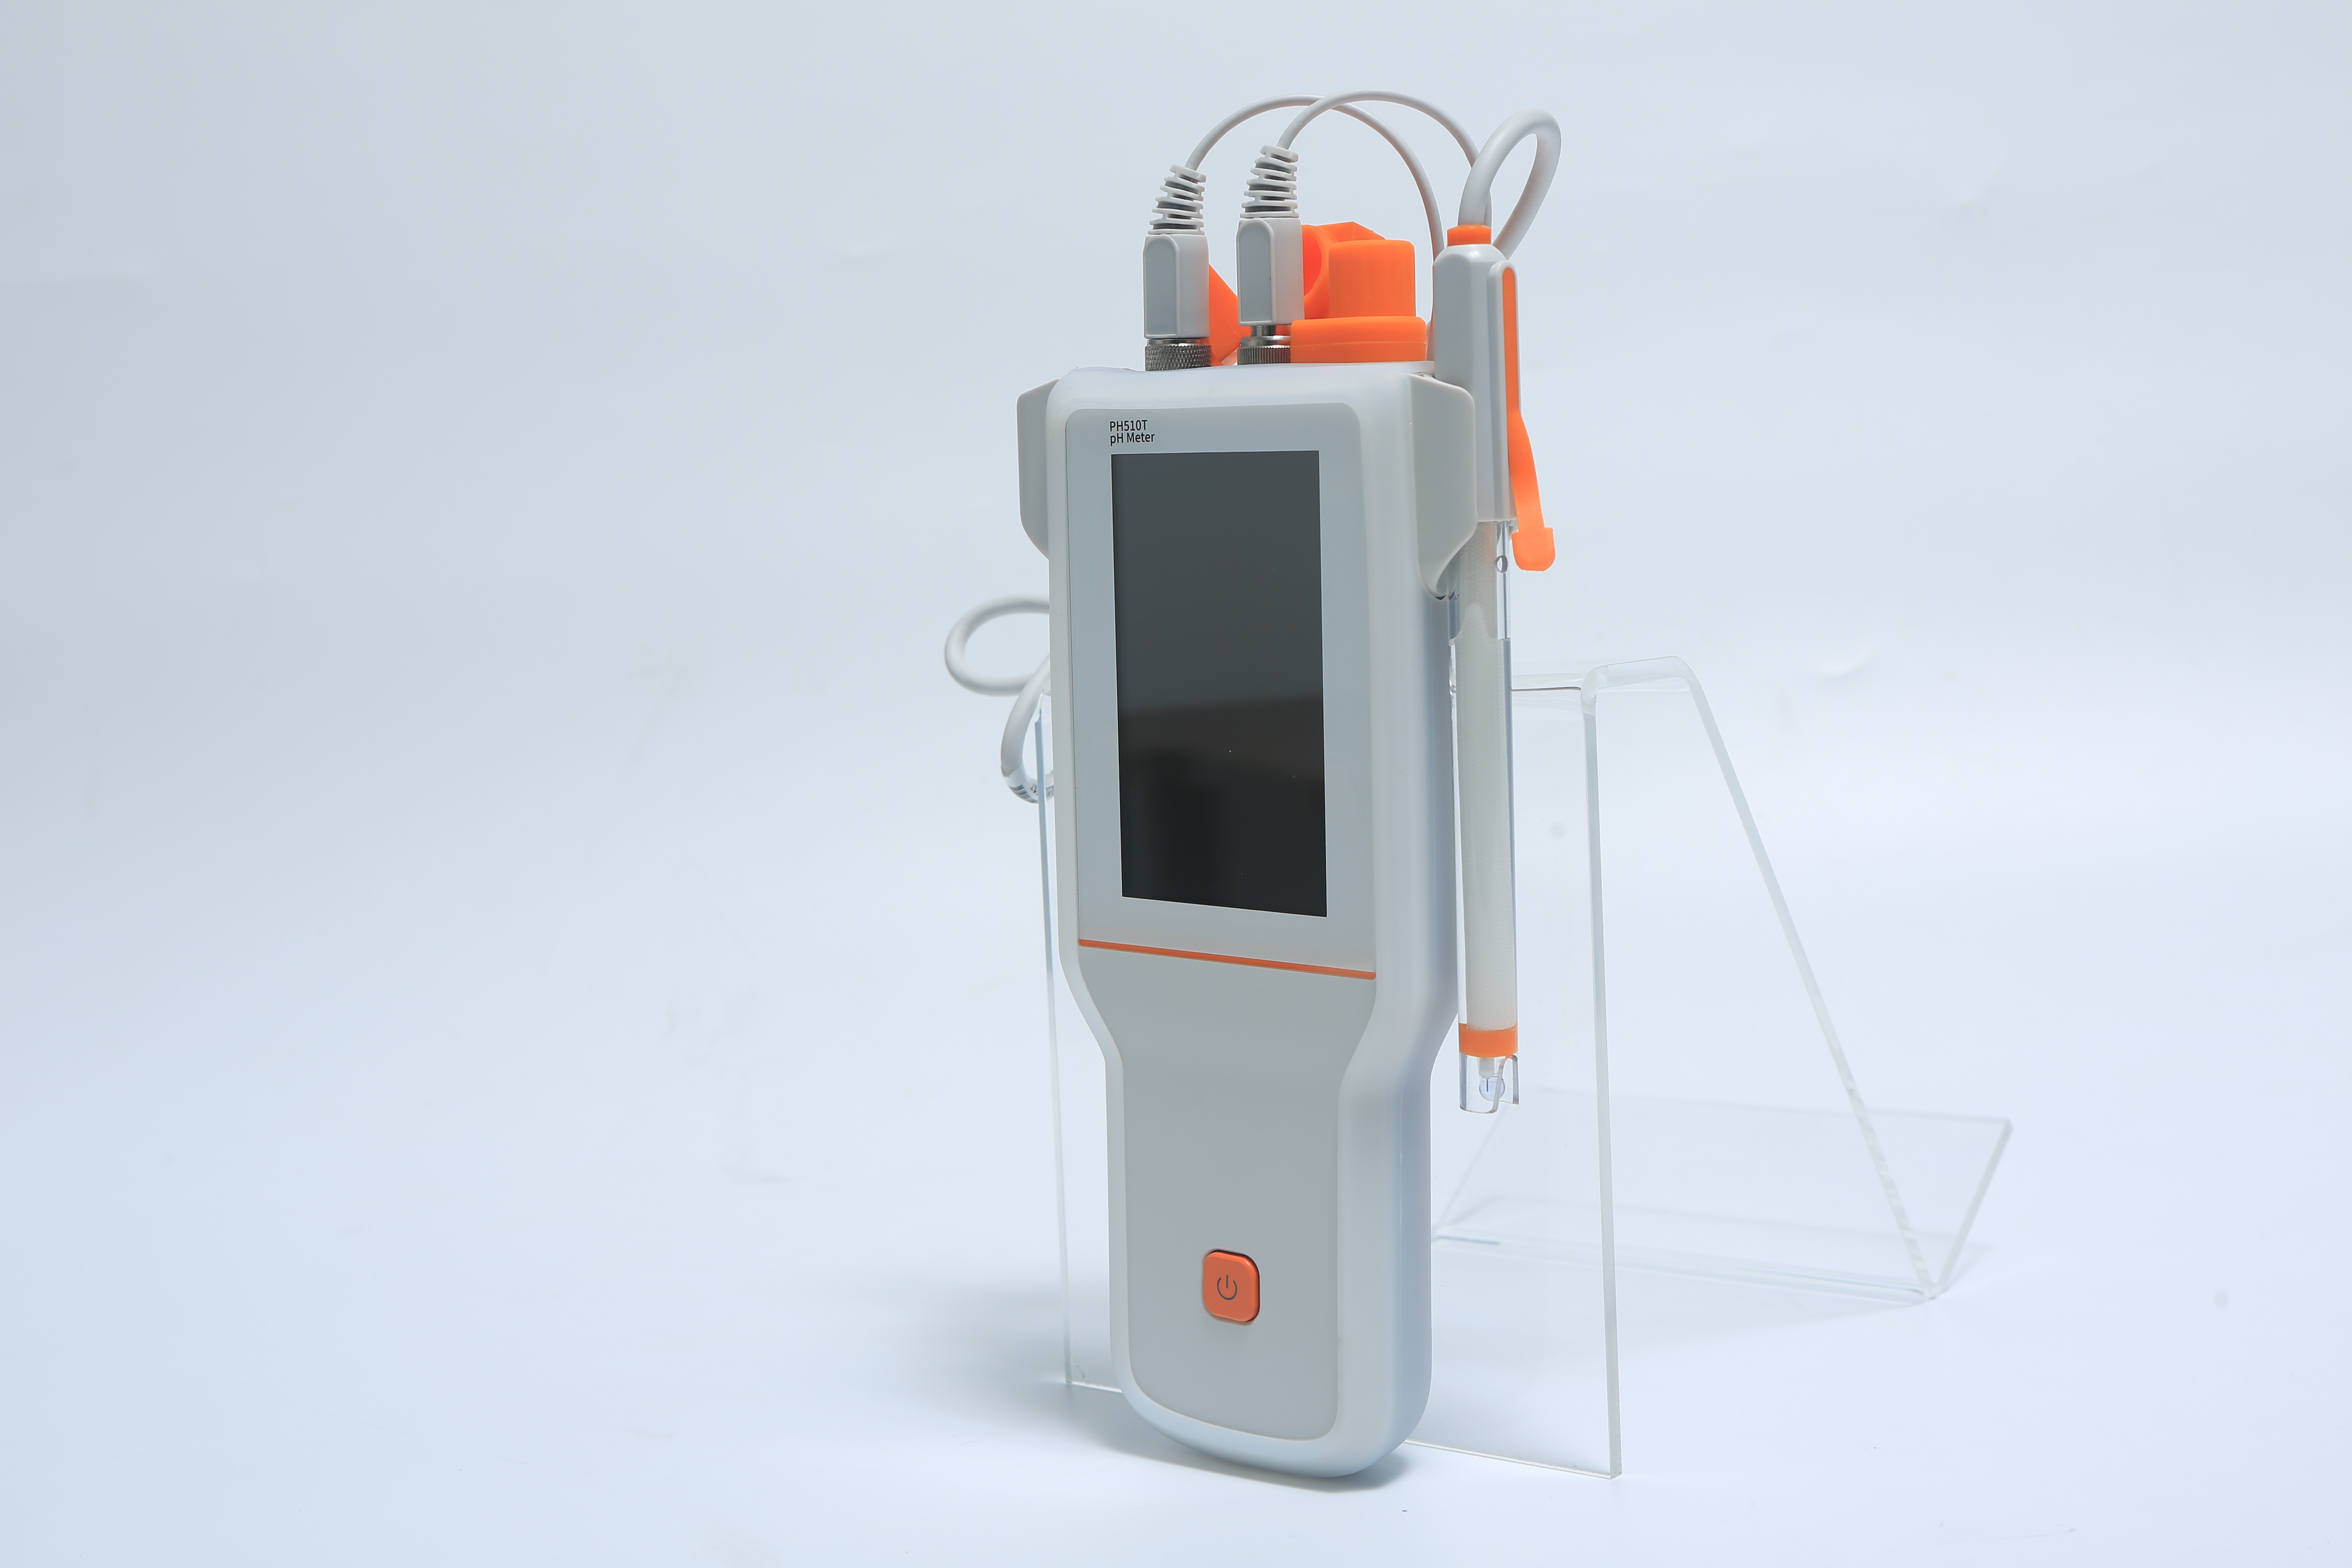 PH510T Portable pH Meter